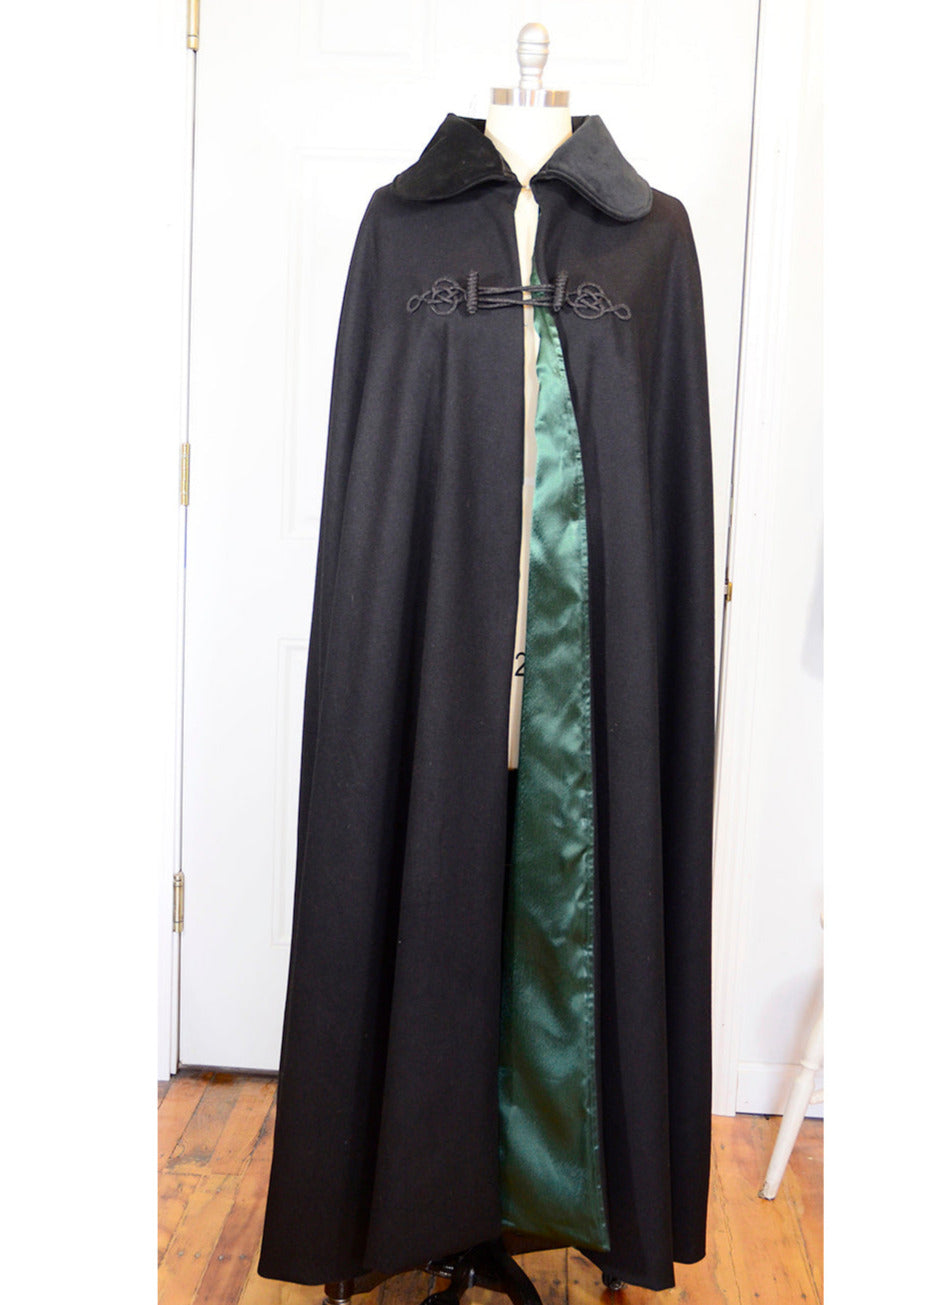 military cloak cape uniform